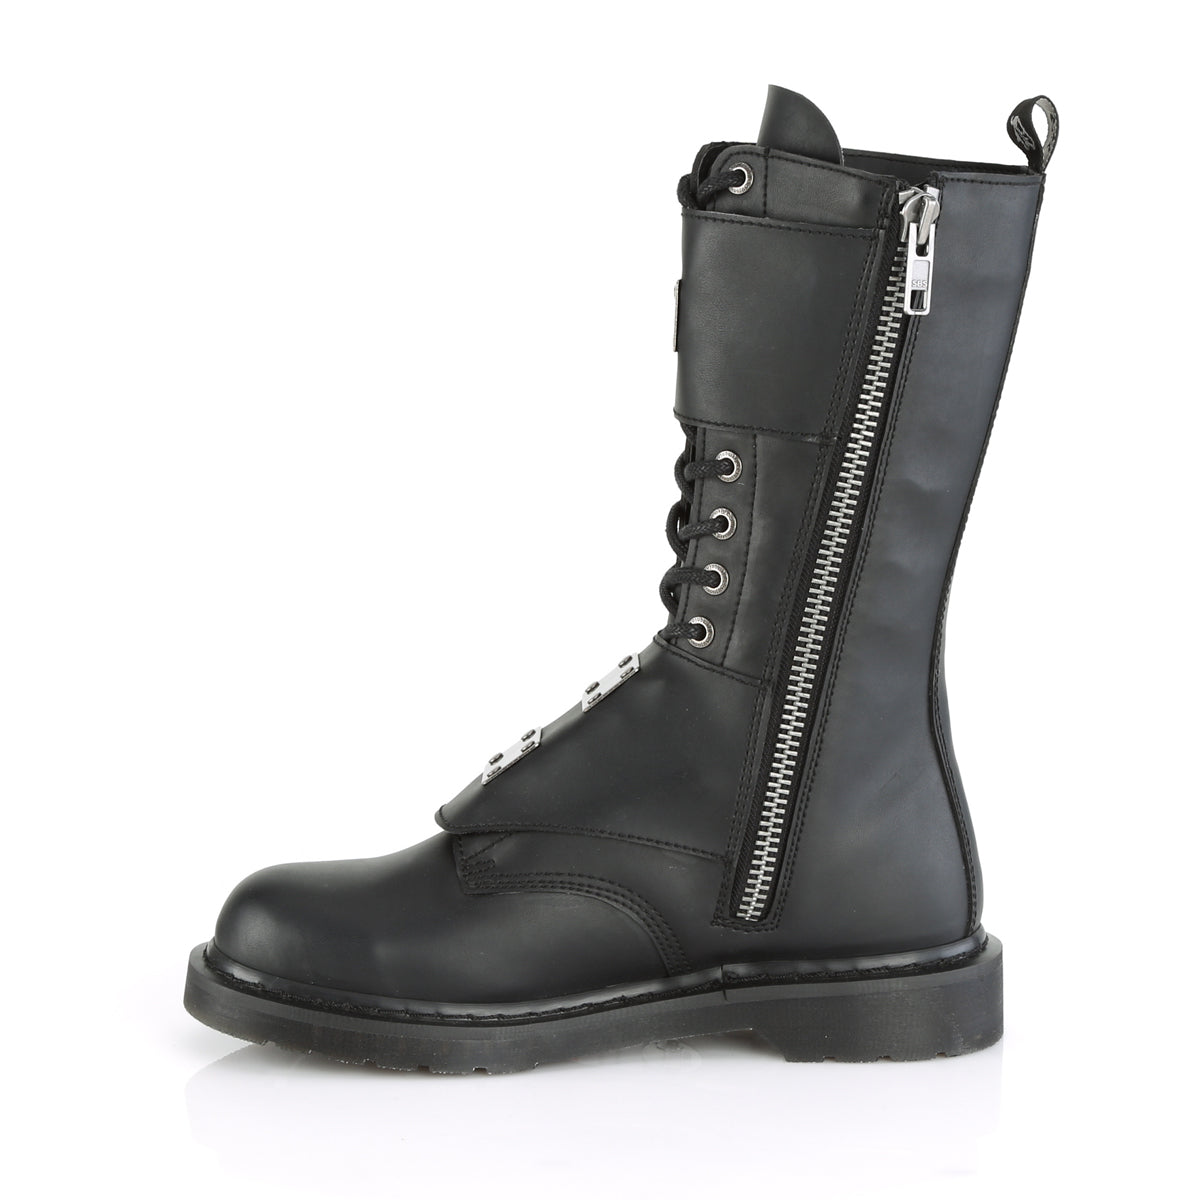 BOLT-345 Black Vegan Leather Mid-Calf Boot Demonia